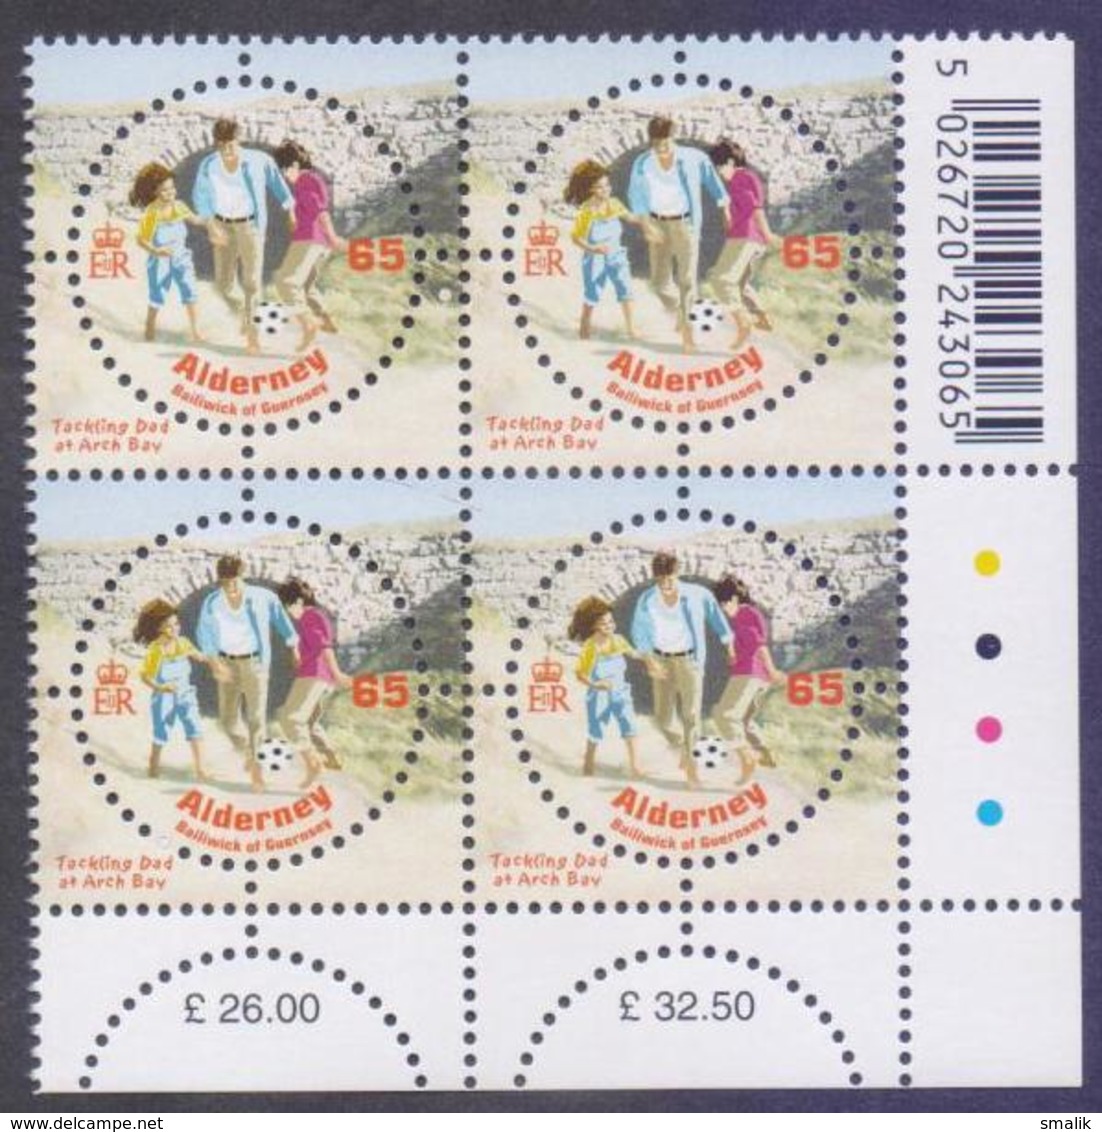 ALDERNEY (Bailiwick Of Guernsey) 2004 - FIFA World Cup Football Unusual Round Shape 65p Stamp, Corner Block Of 4, MNH - Alderney